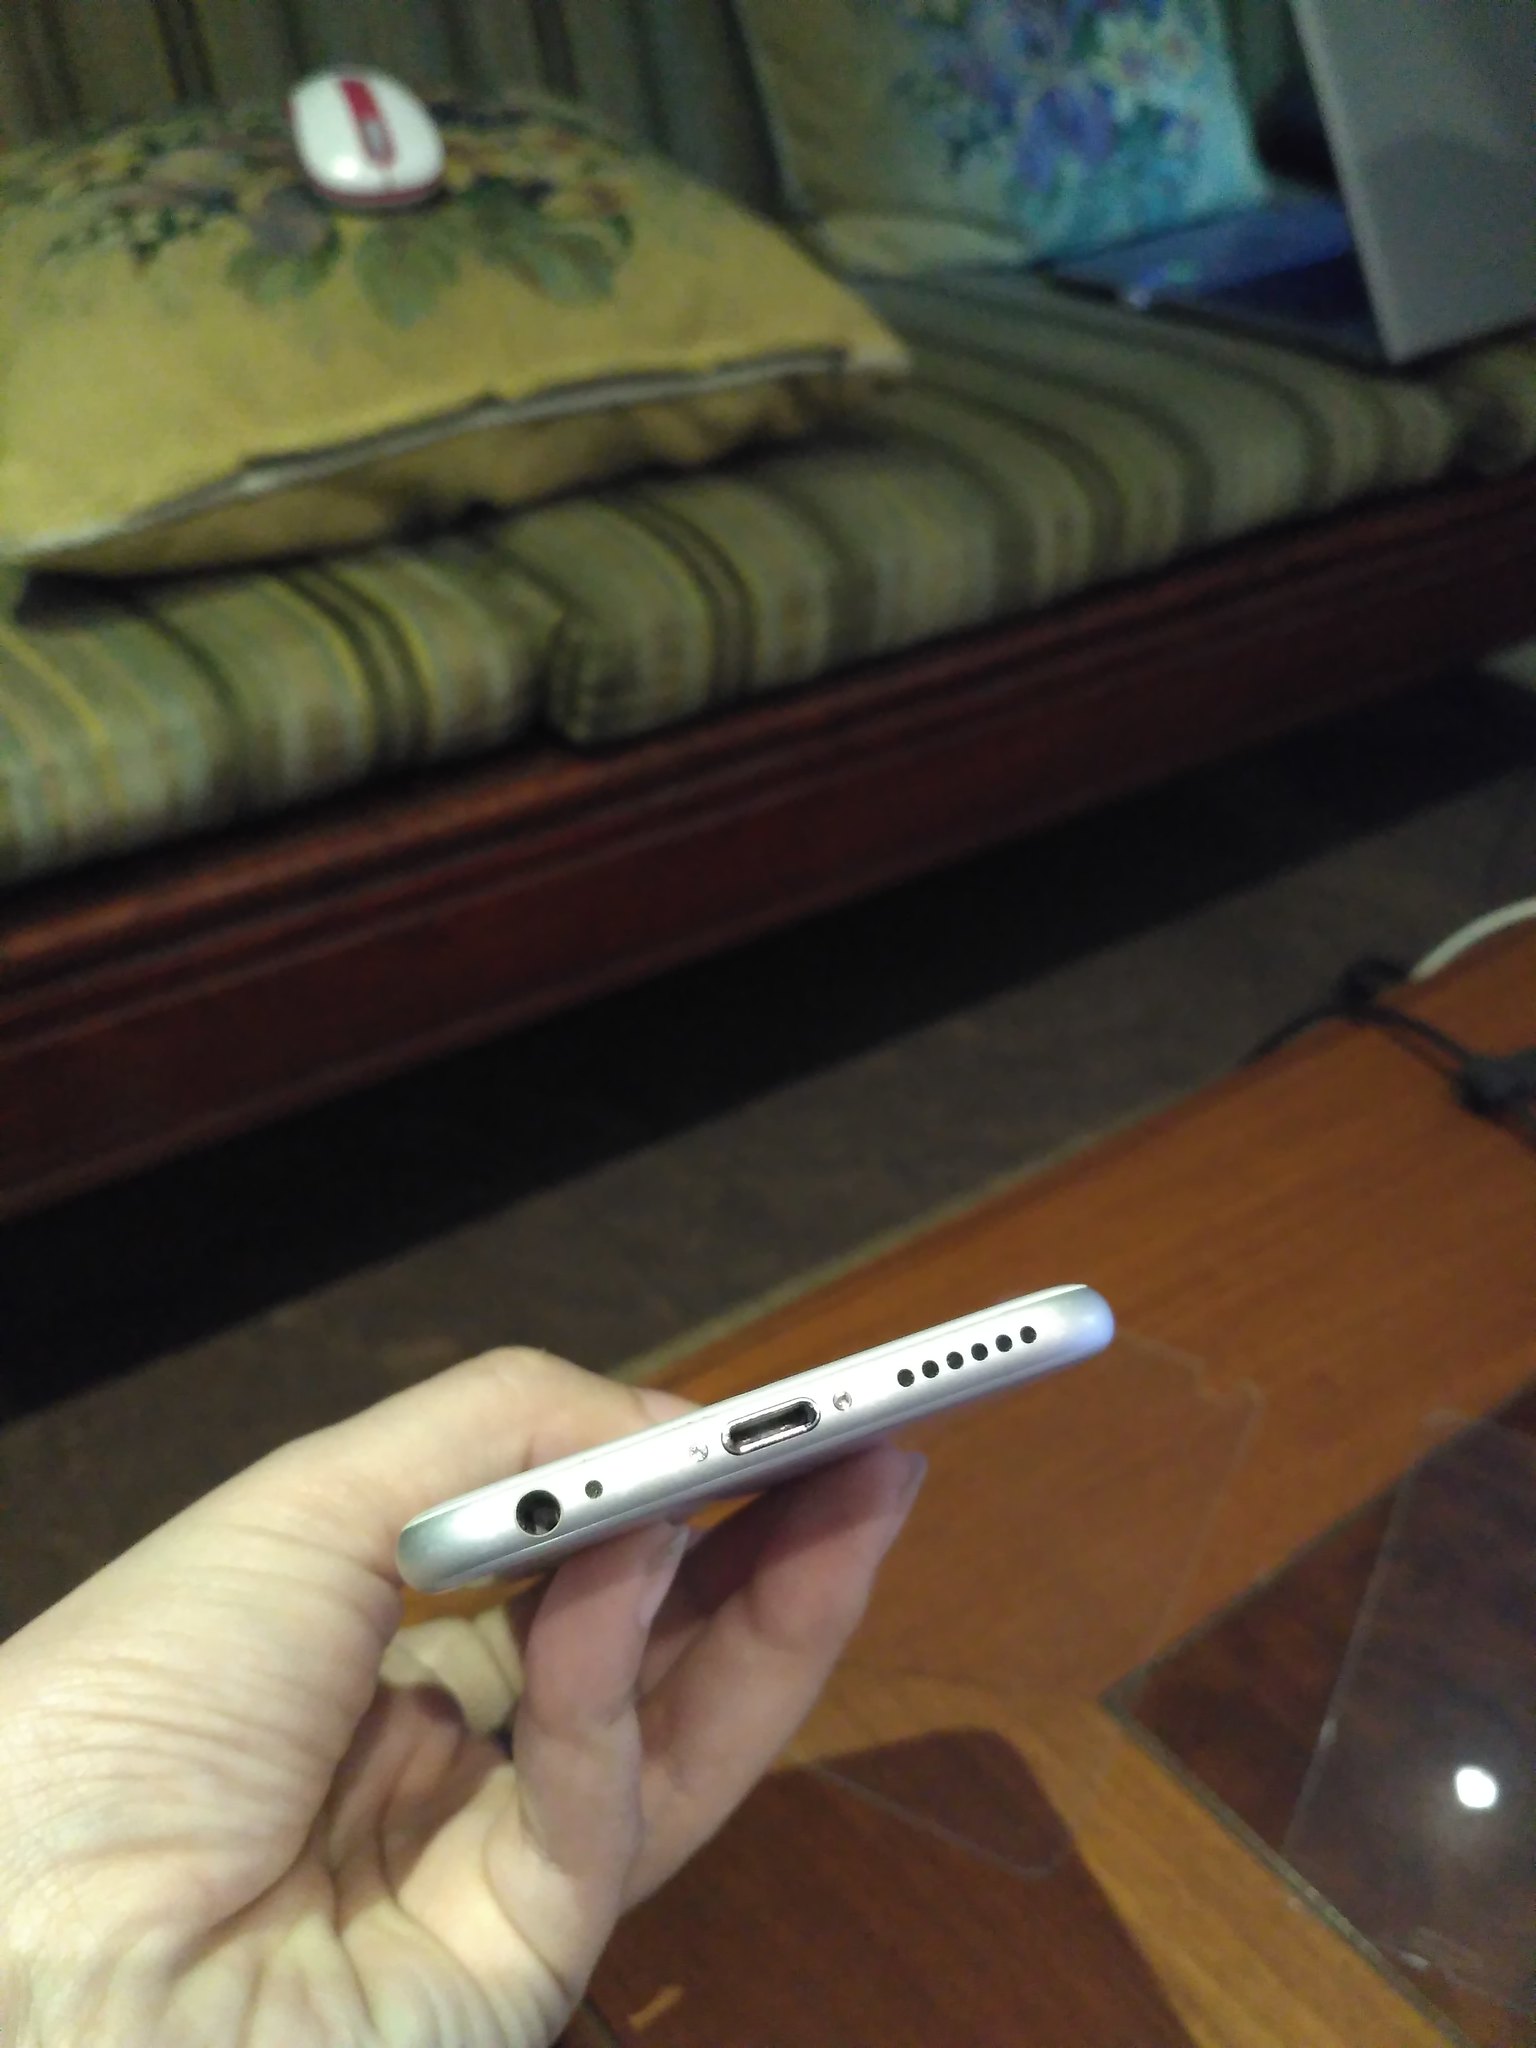 iPhone 6 64GB Silver Quốc tế, fullbox, máy đẹp, giá tốt - 4